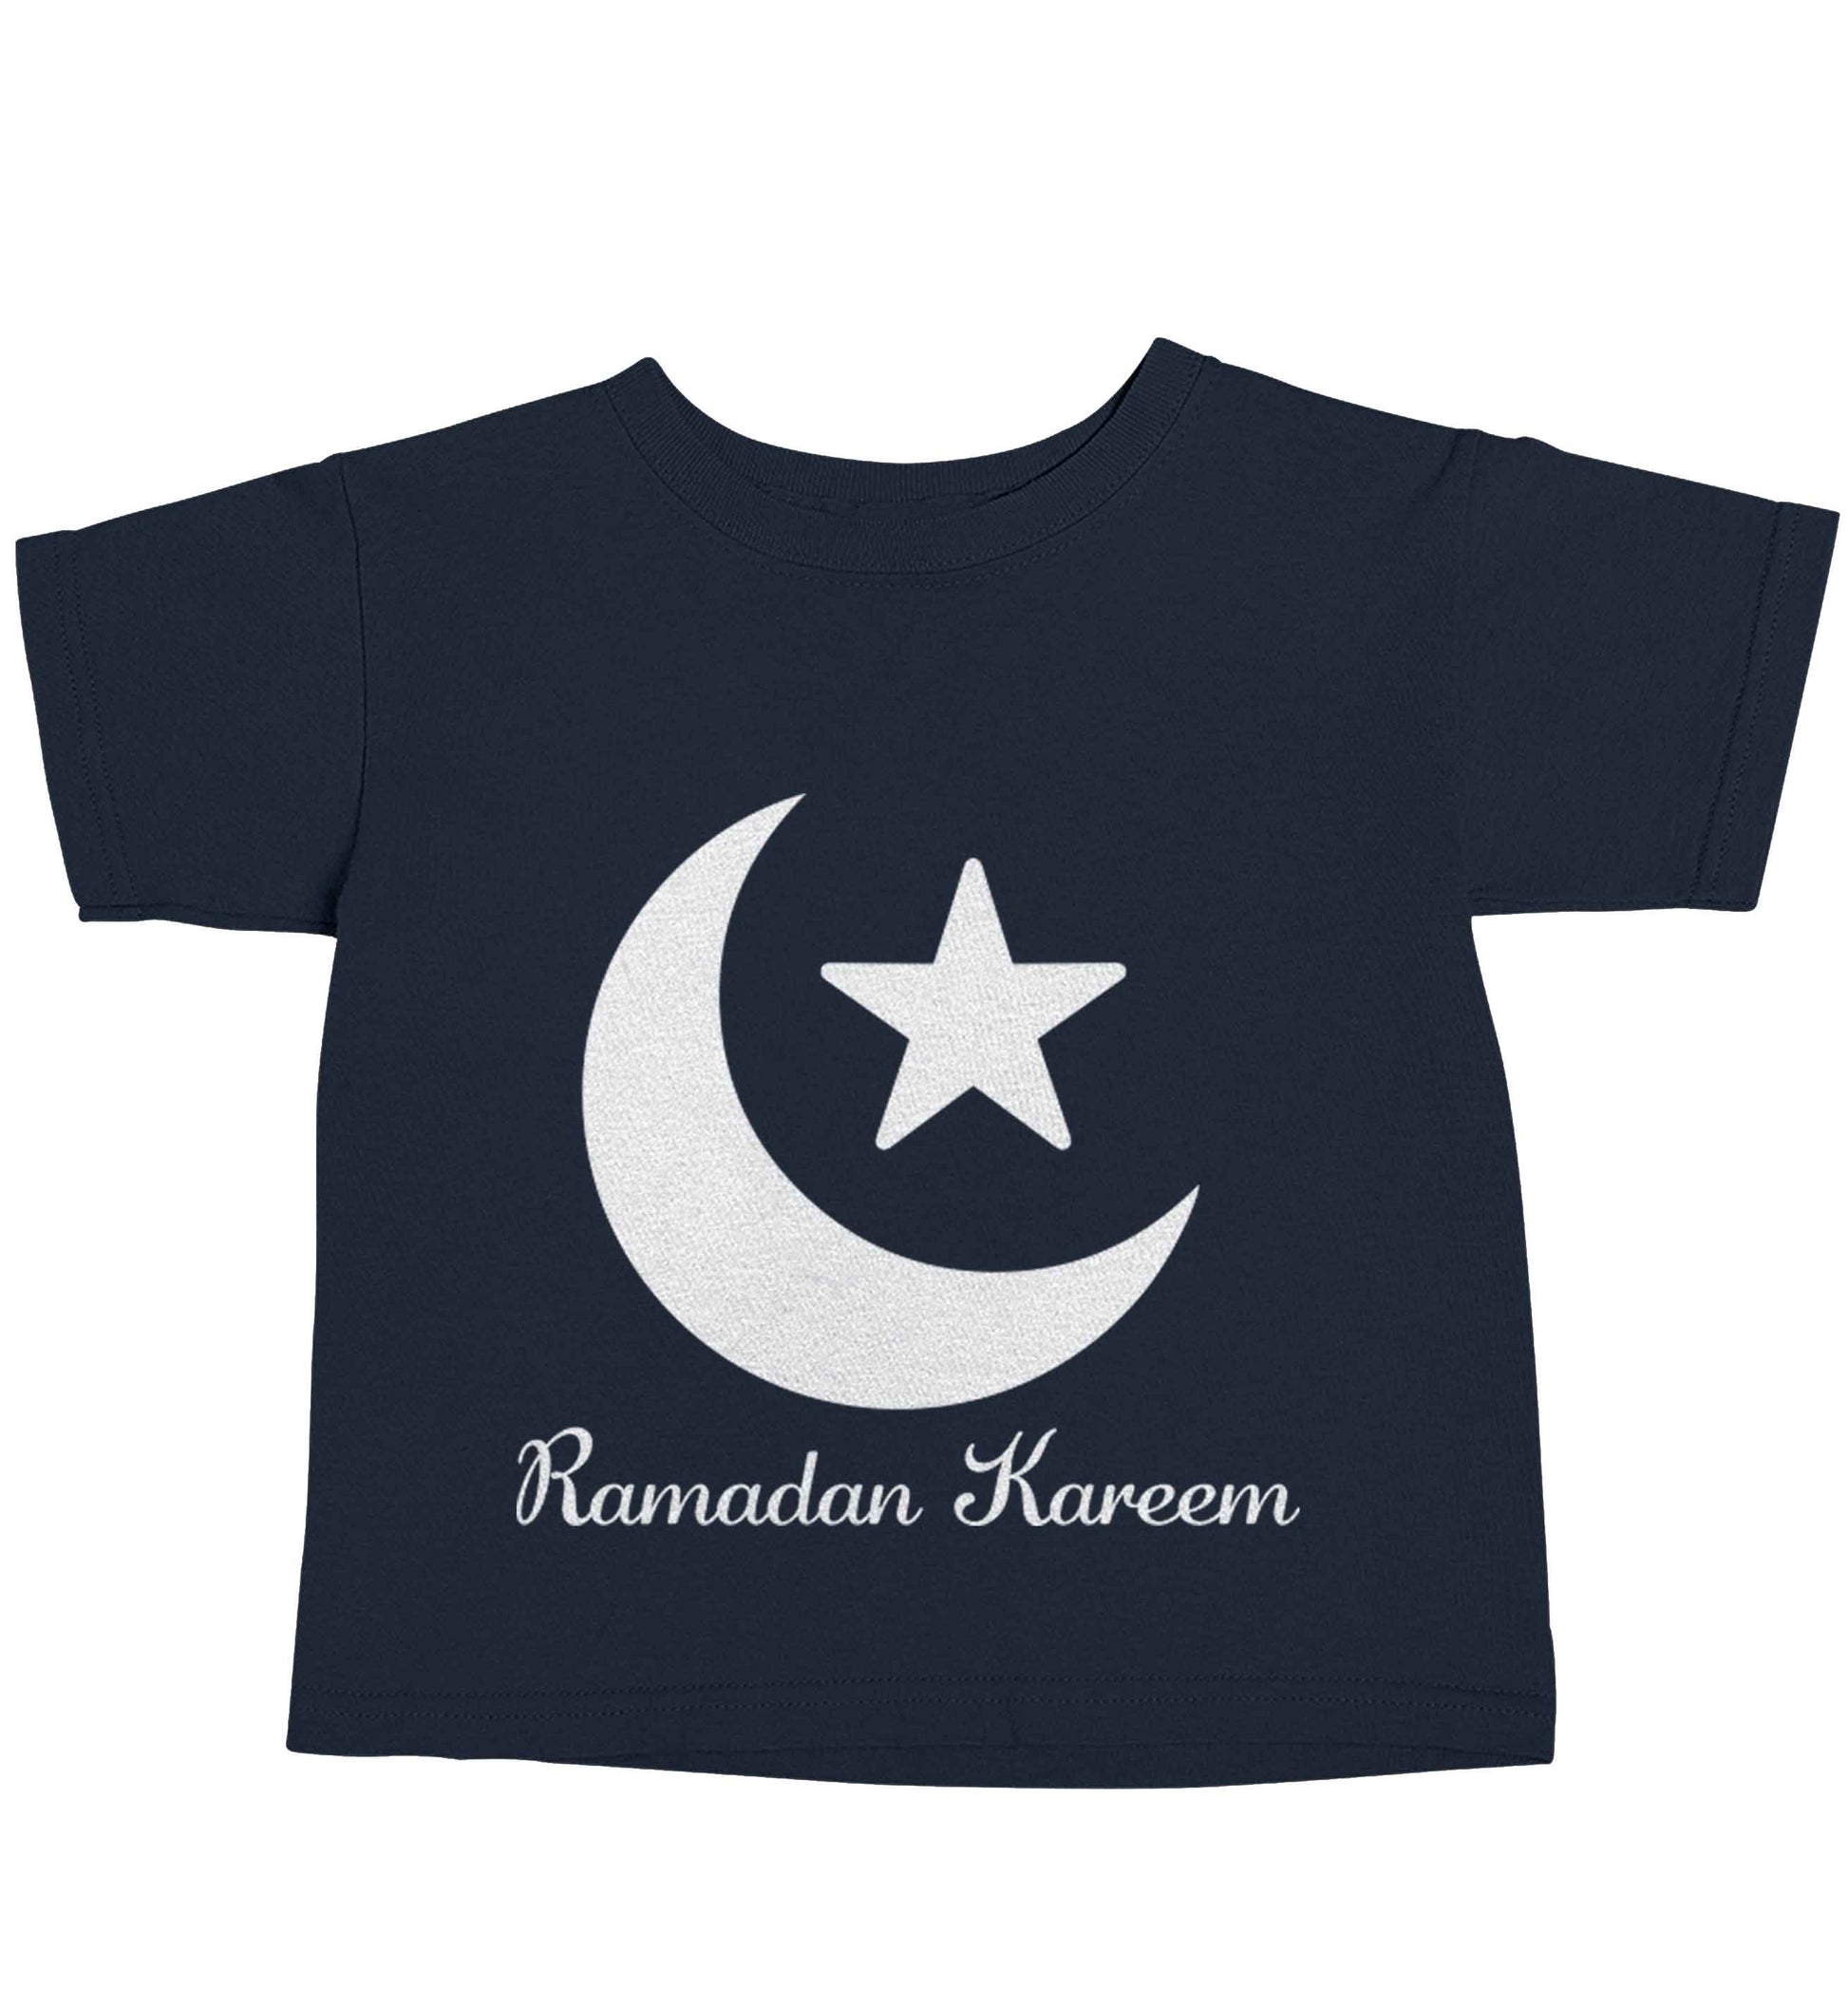 Ramadan kareem navy baby toddler Tshirt 2 Years